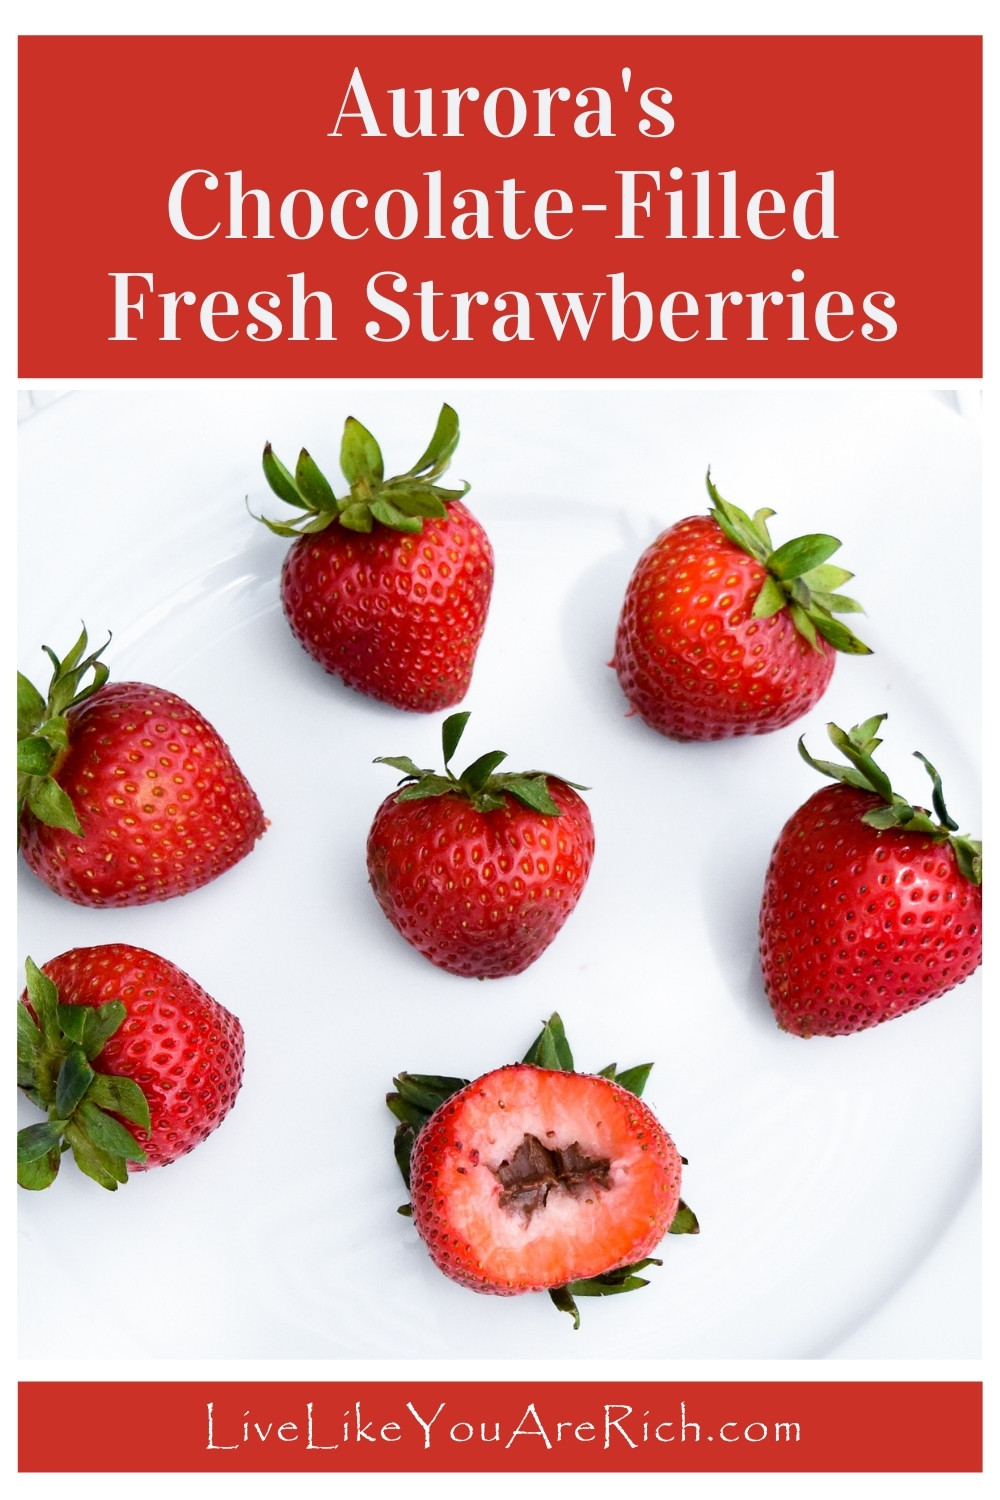 Aurora's Chocolate-Filled Fresh Strawberries